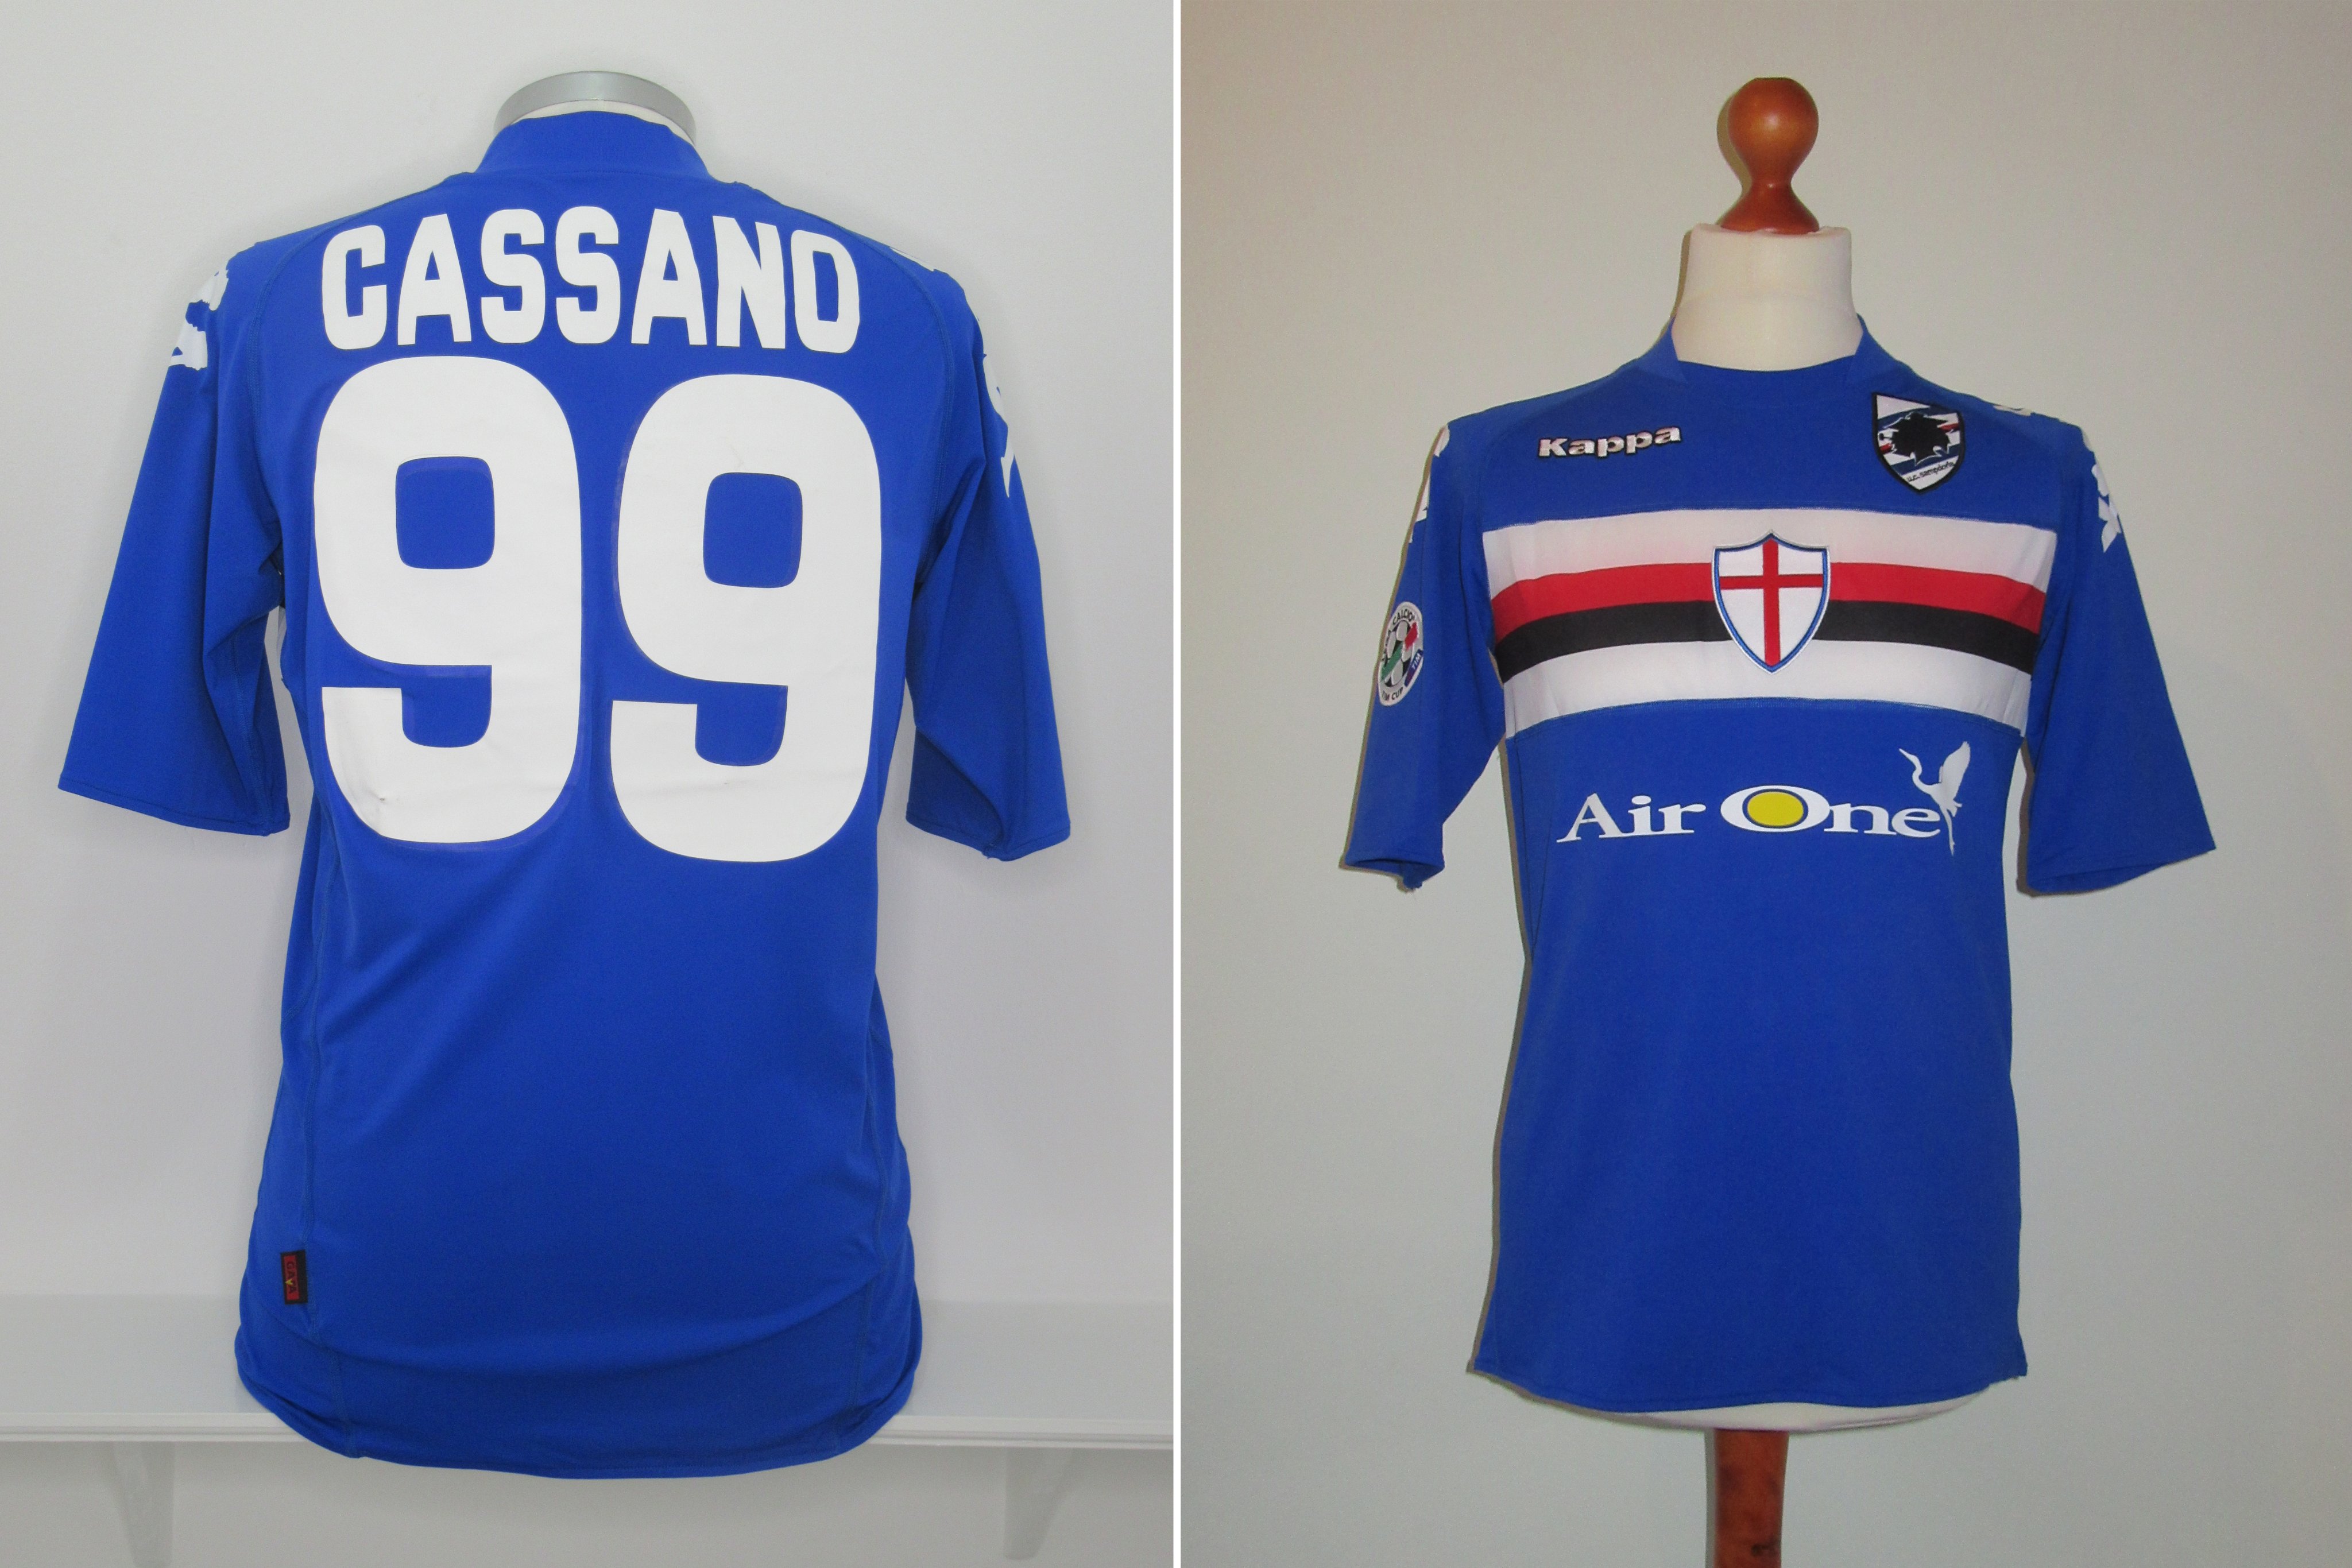 Cassano Sampdoria match worn